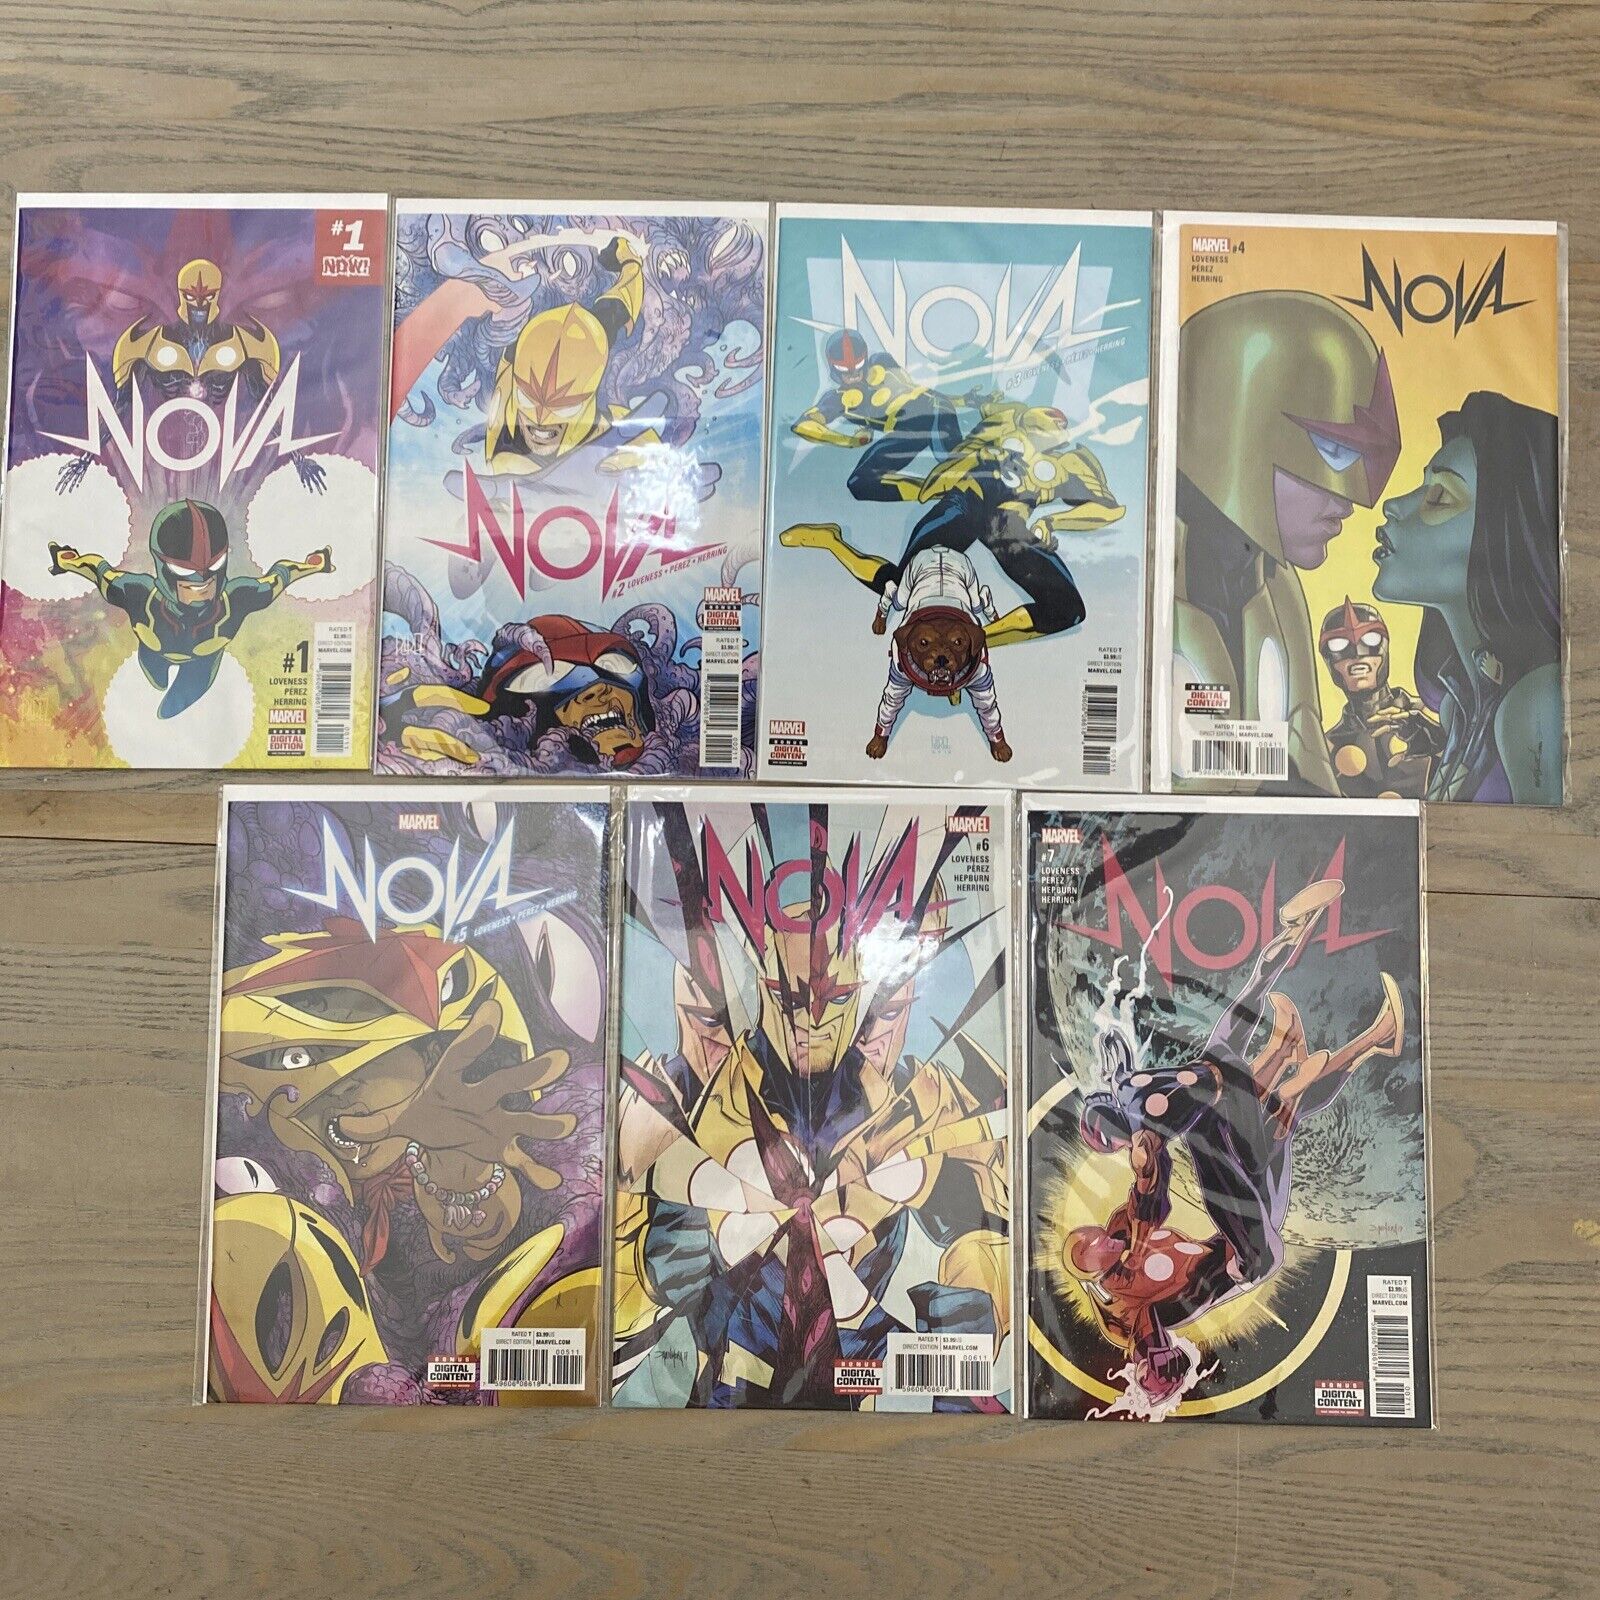 Nova #1-7 (2017) Complete Set Marvel Comics by Ramon Perez and Jeff Loveness